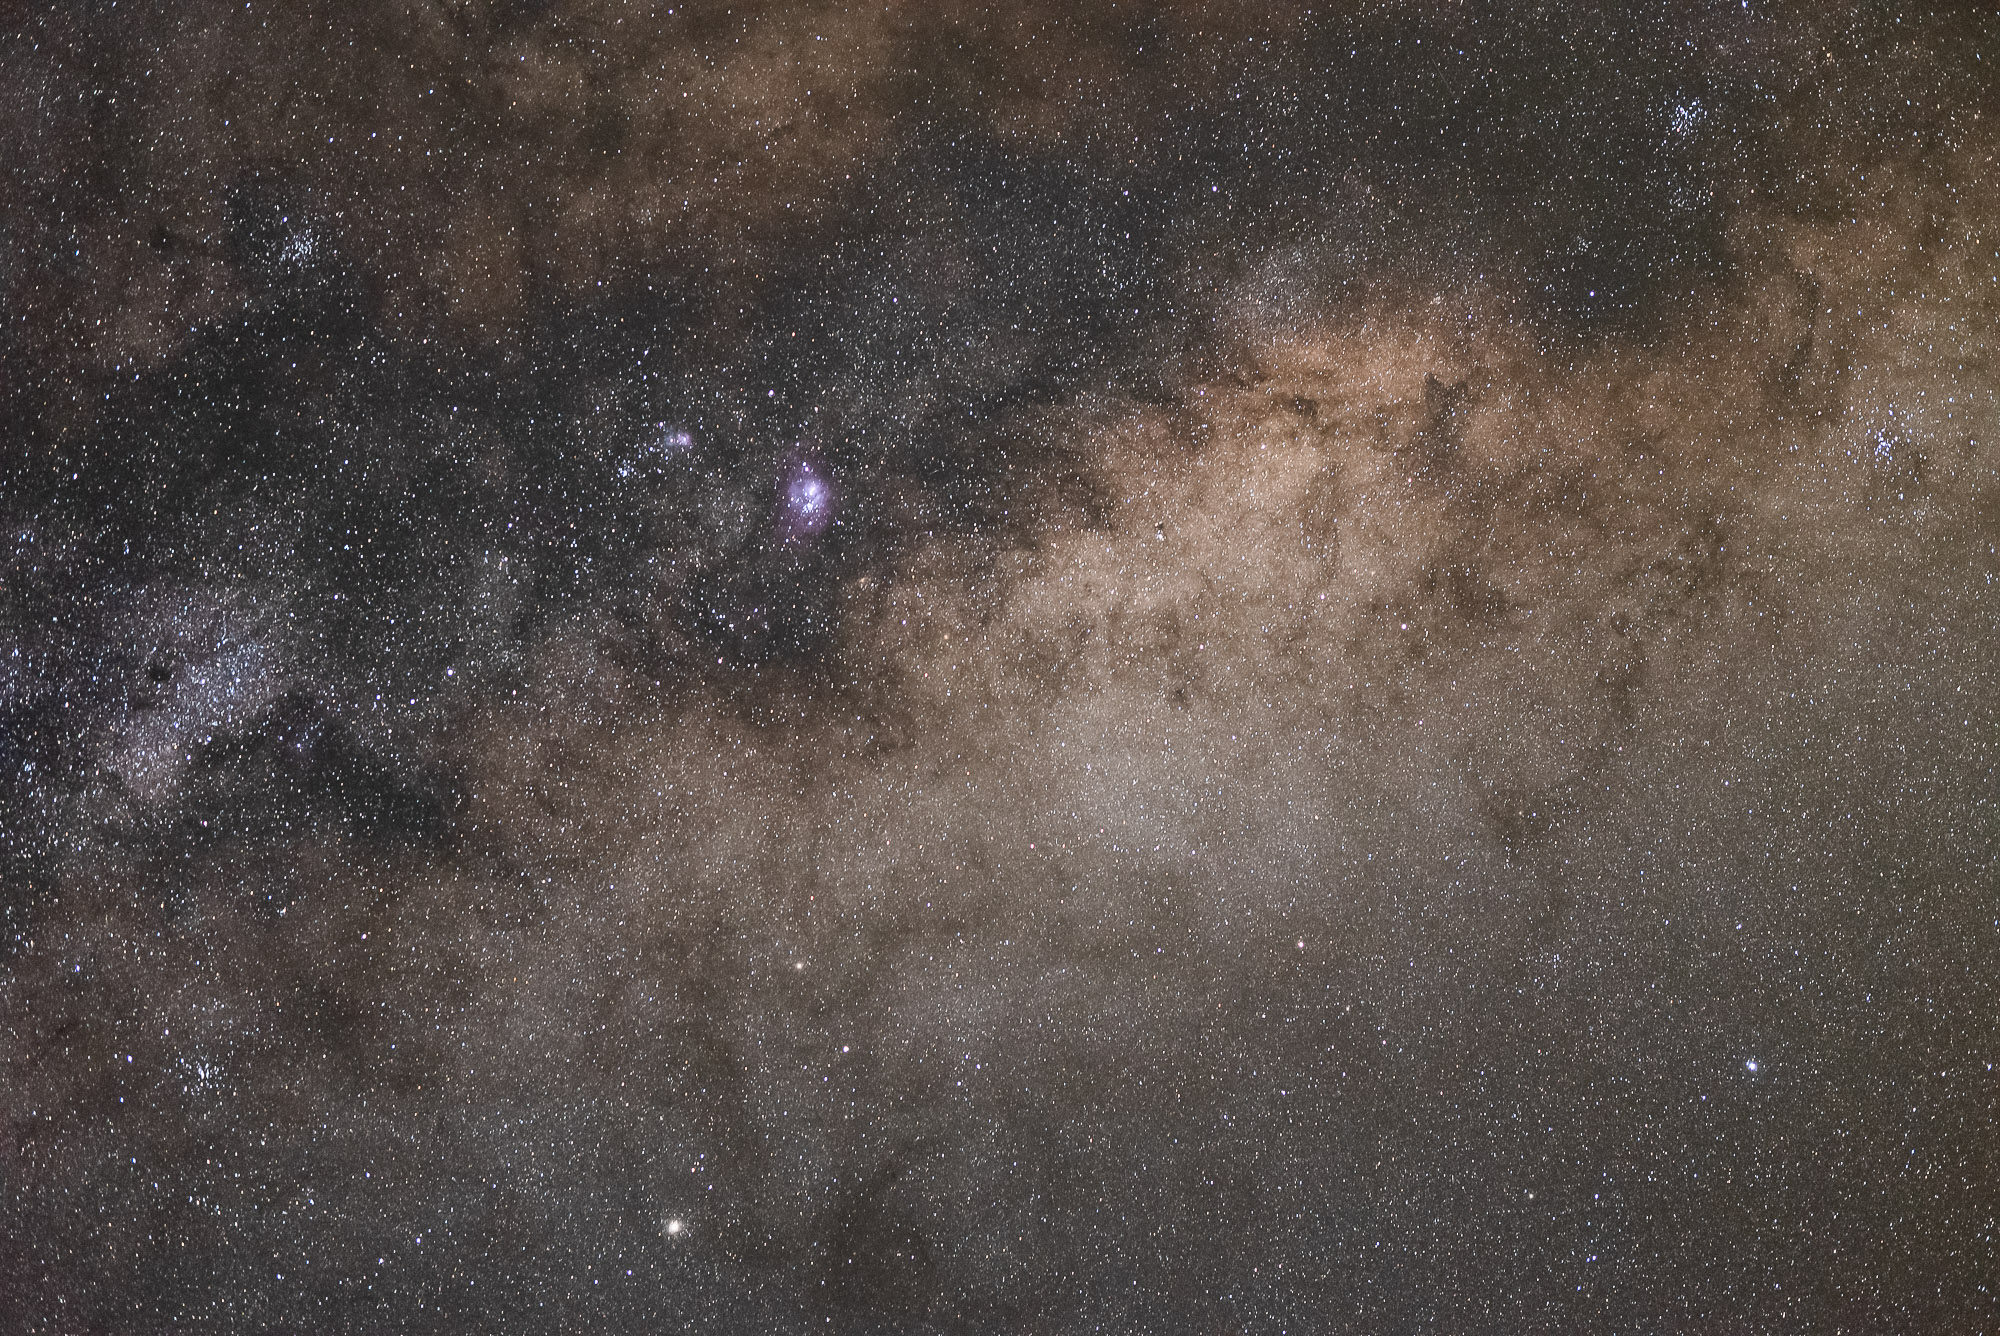 Milky Way Galactic Center shot on the Sigma 105mm f/1.4 DG HSM Art Lens